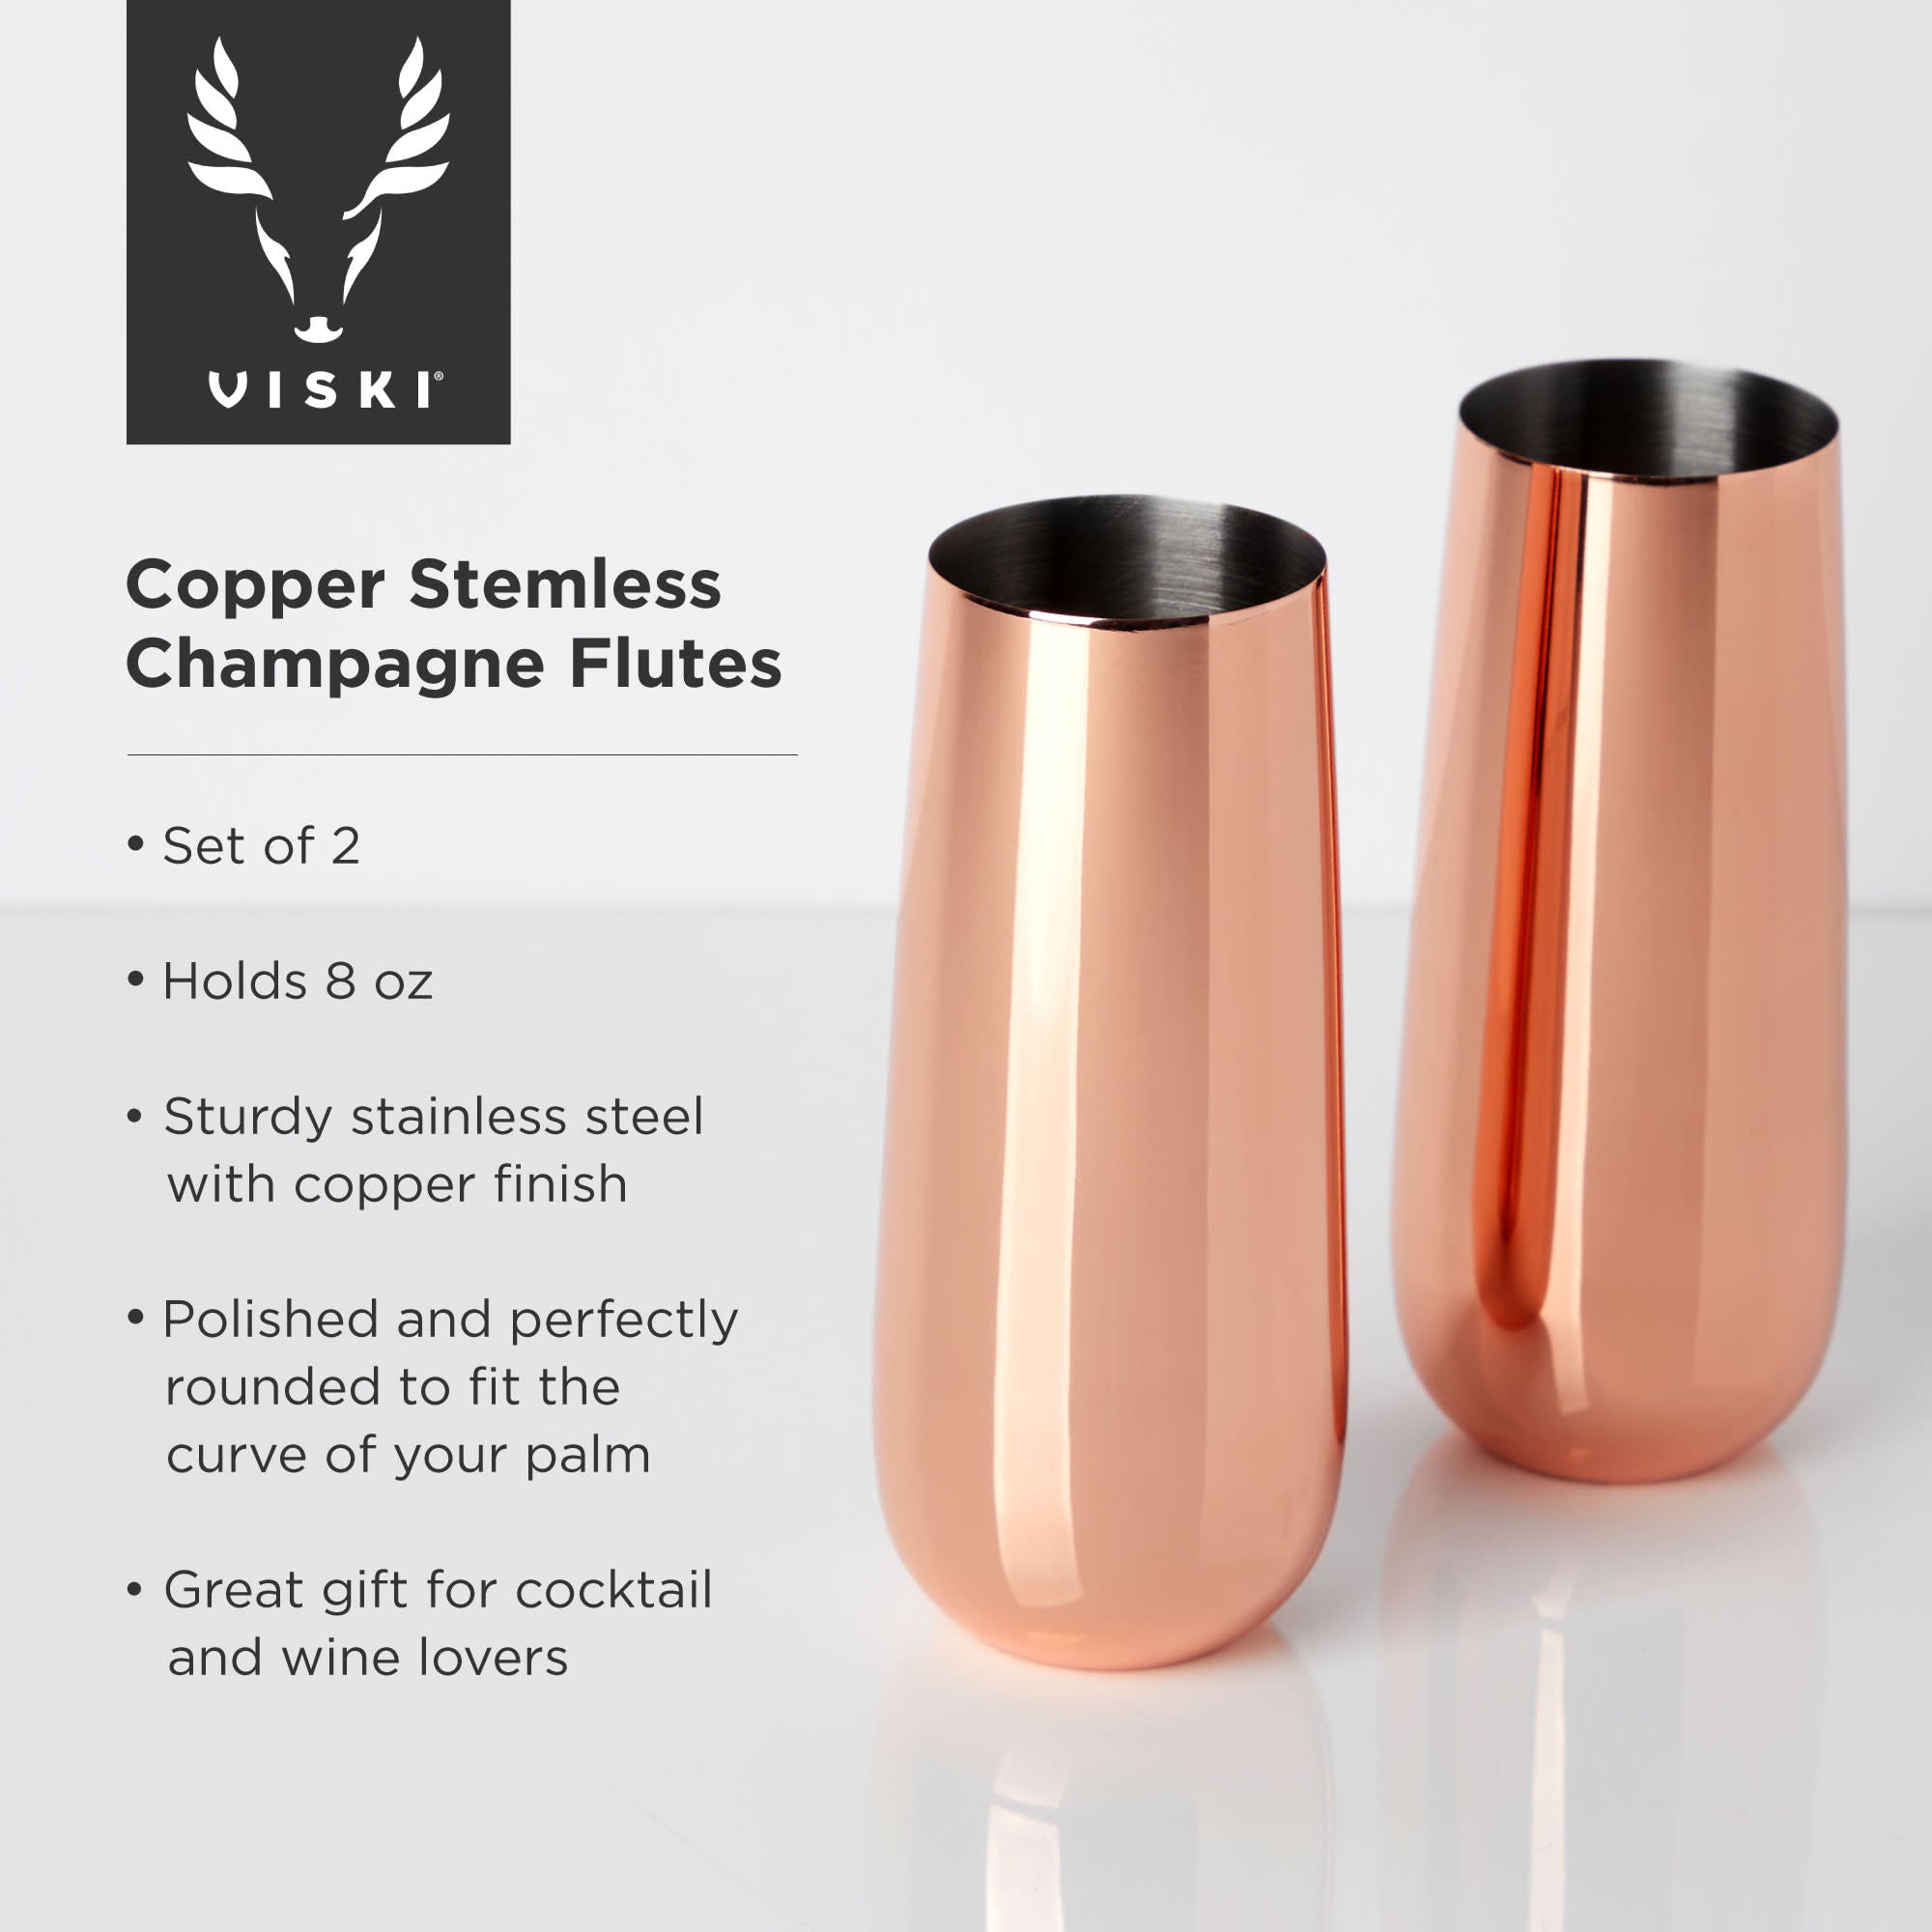 Copper Stemless Champagne Flutes by Viski®